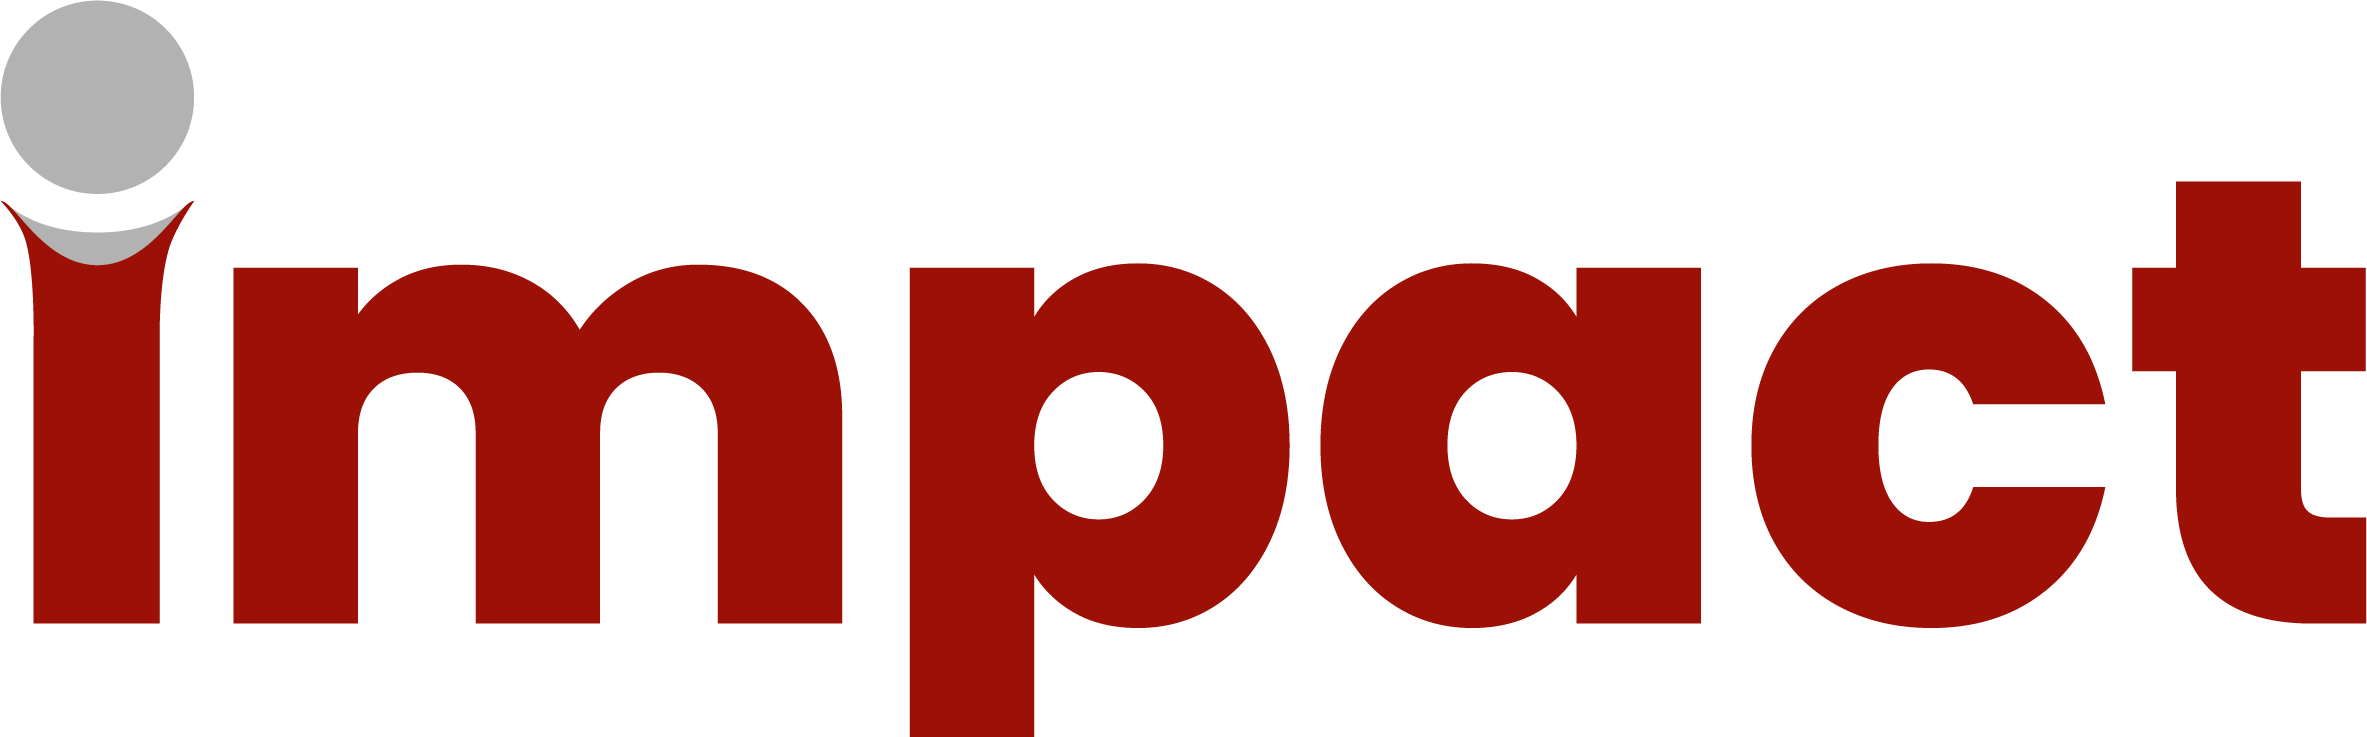 Impact Innovations Logo 2021